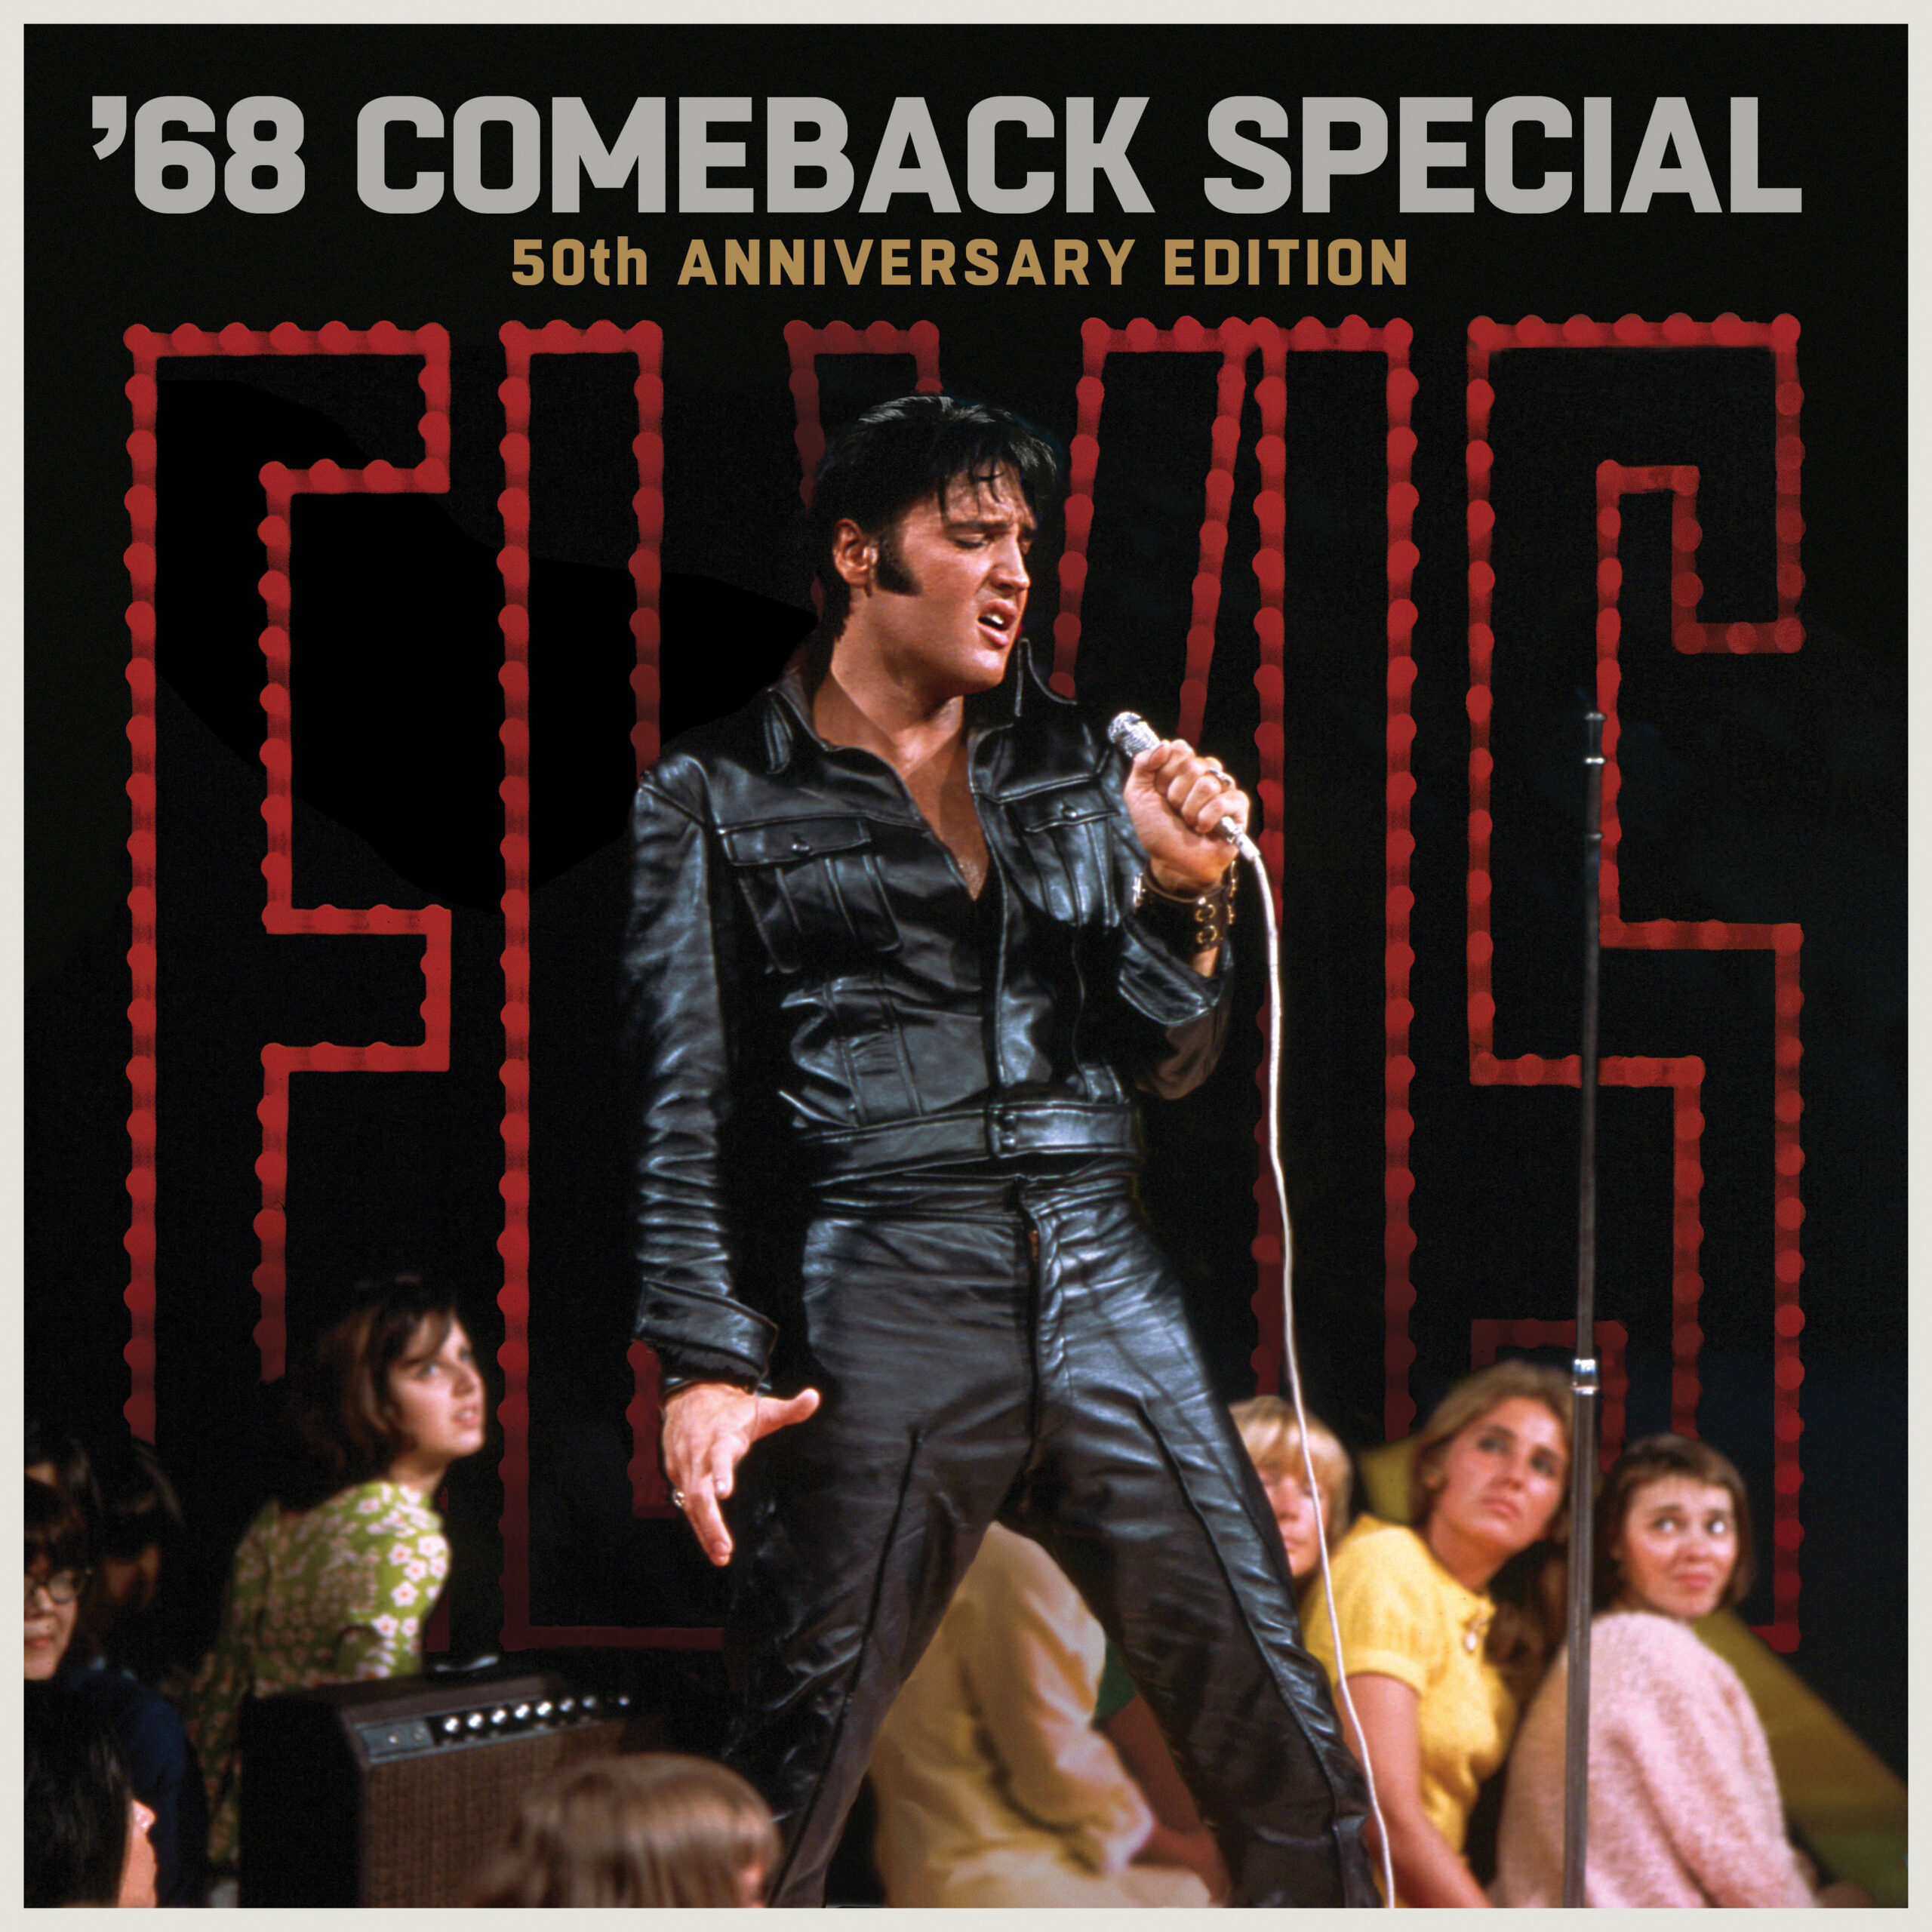 Kubernik On New Elvis Documentary Music Connection Magazine